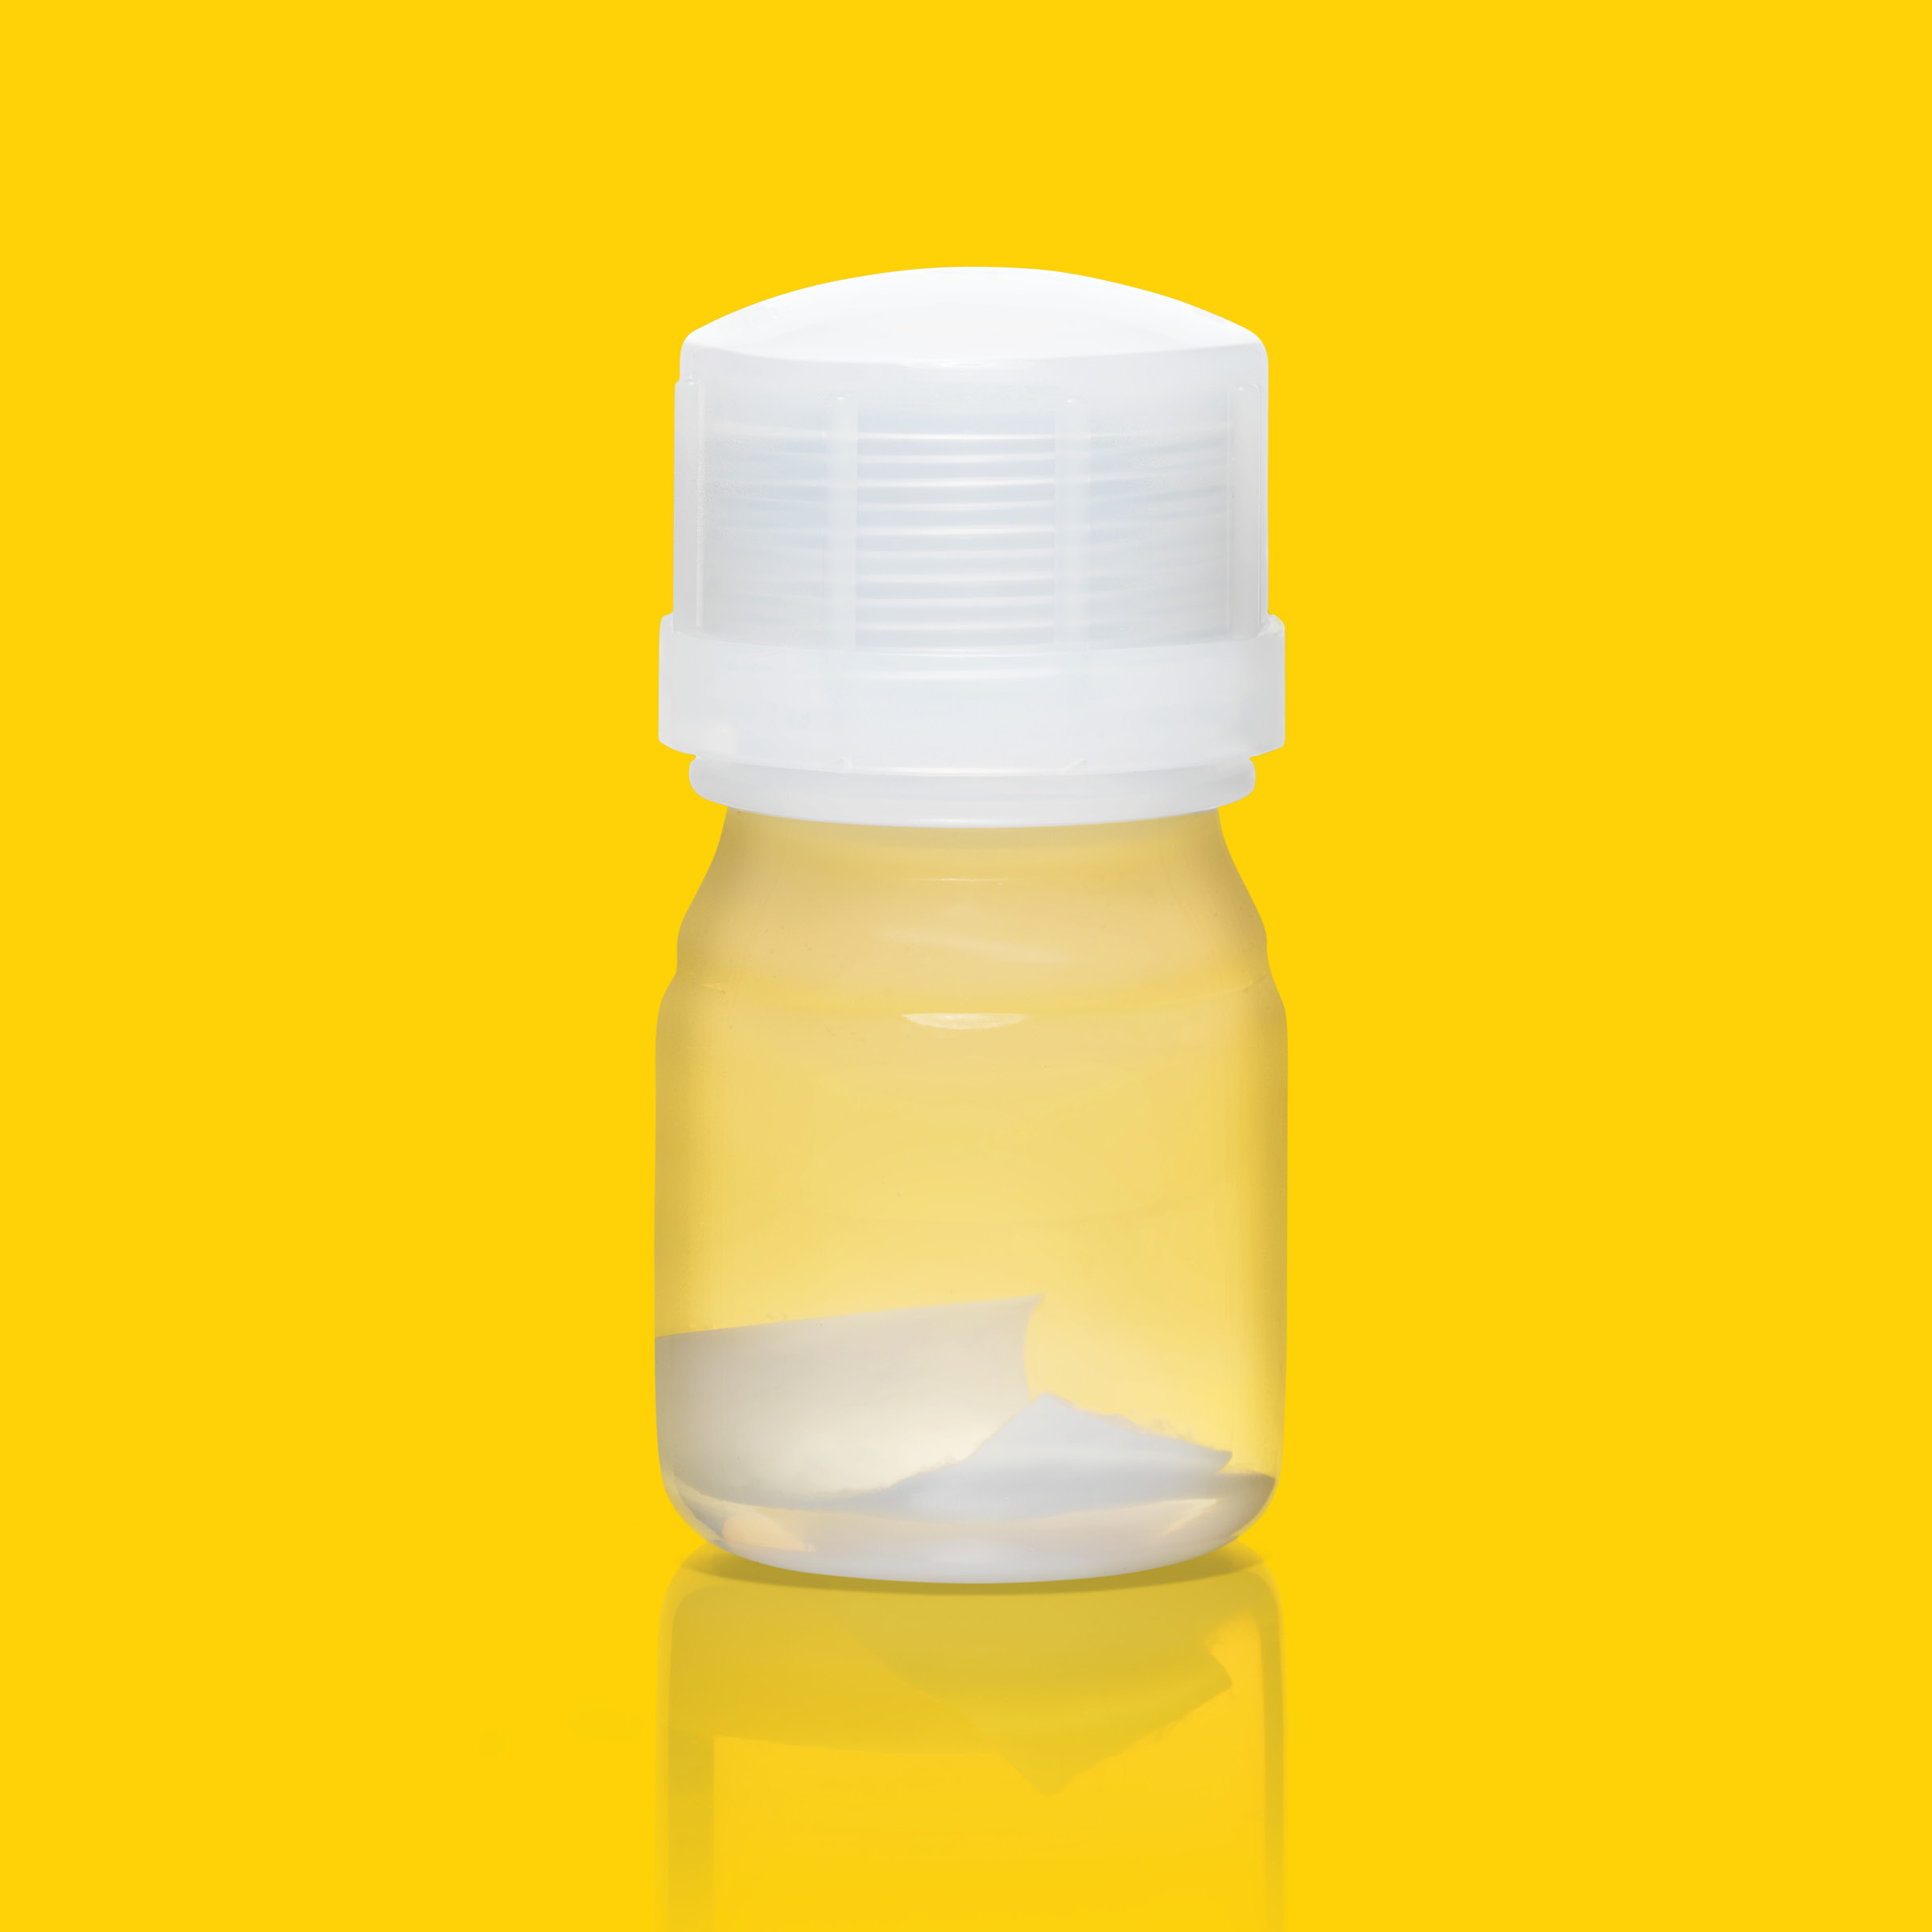 MACI bottle - no label. On yellow background.